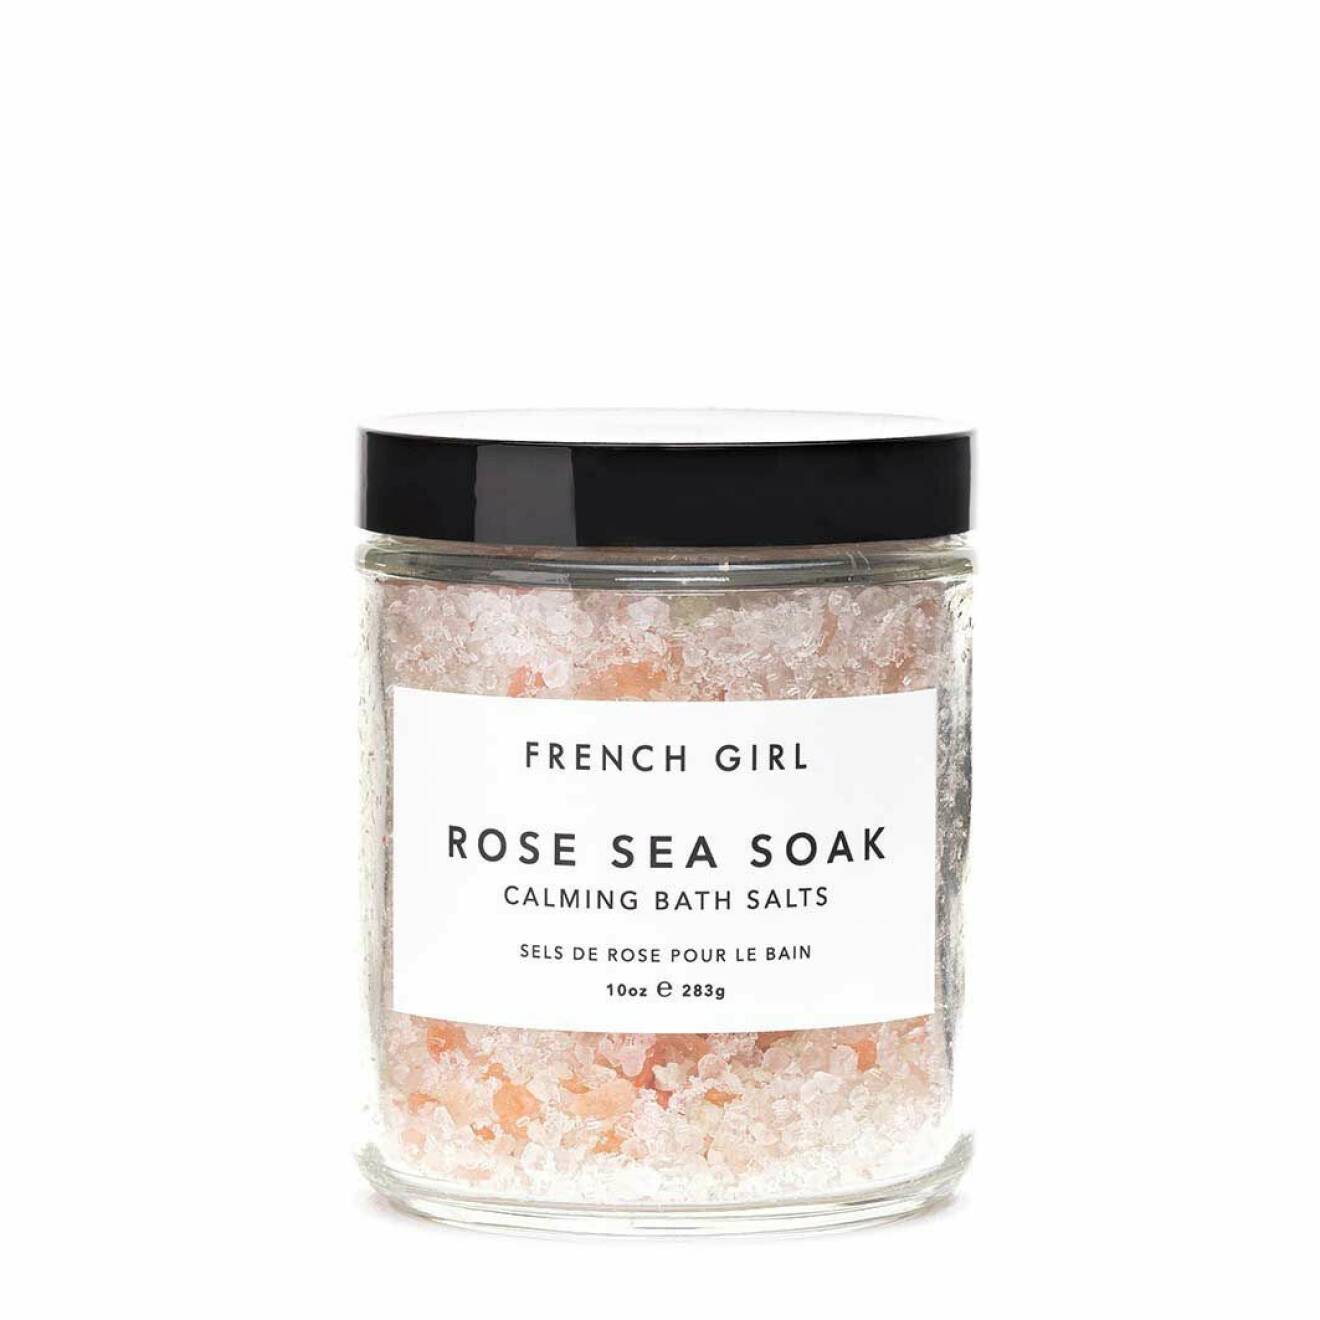 Rose Sea Soak från French Girl.